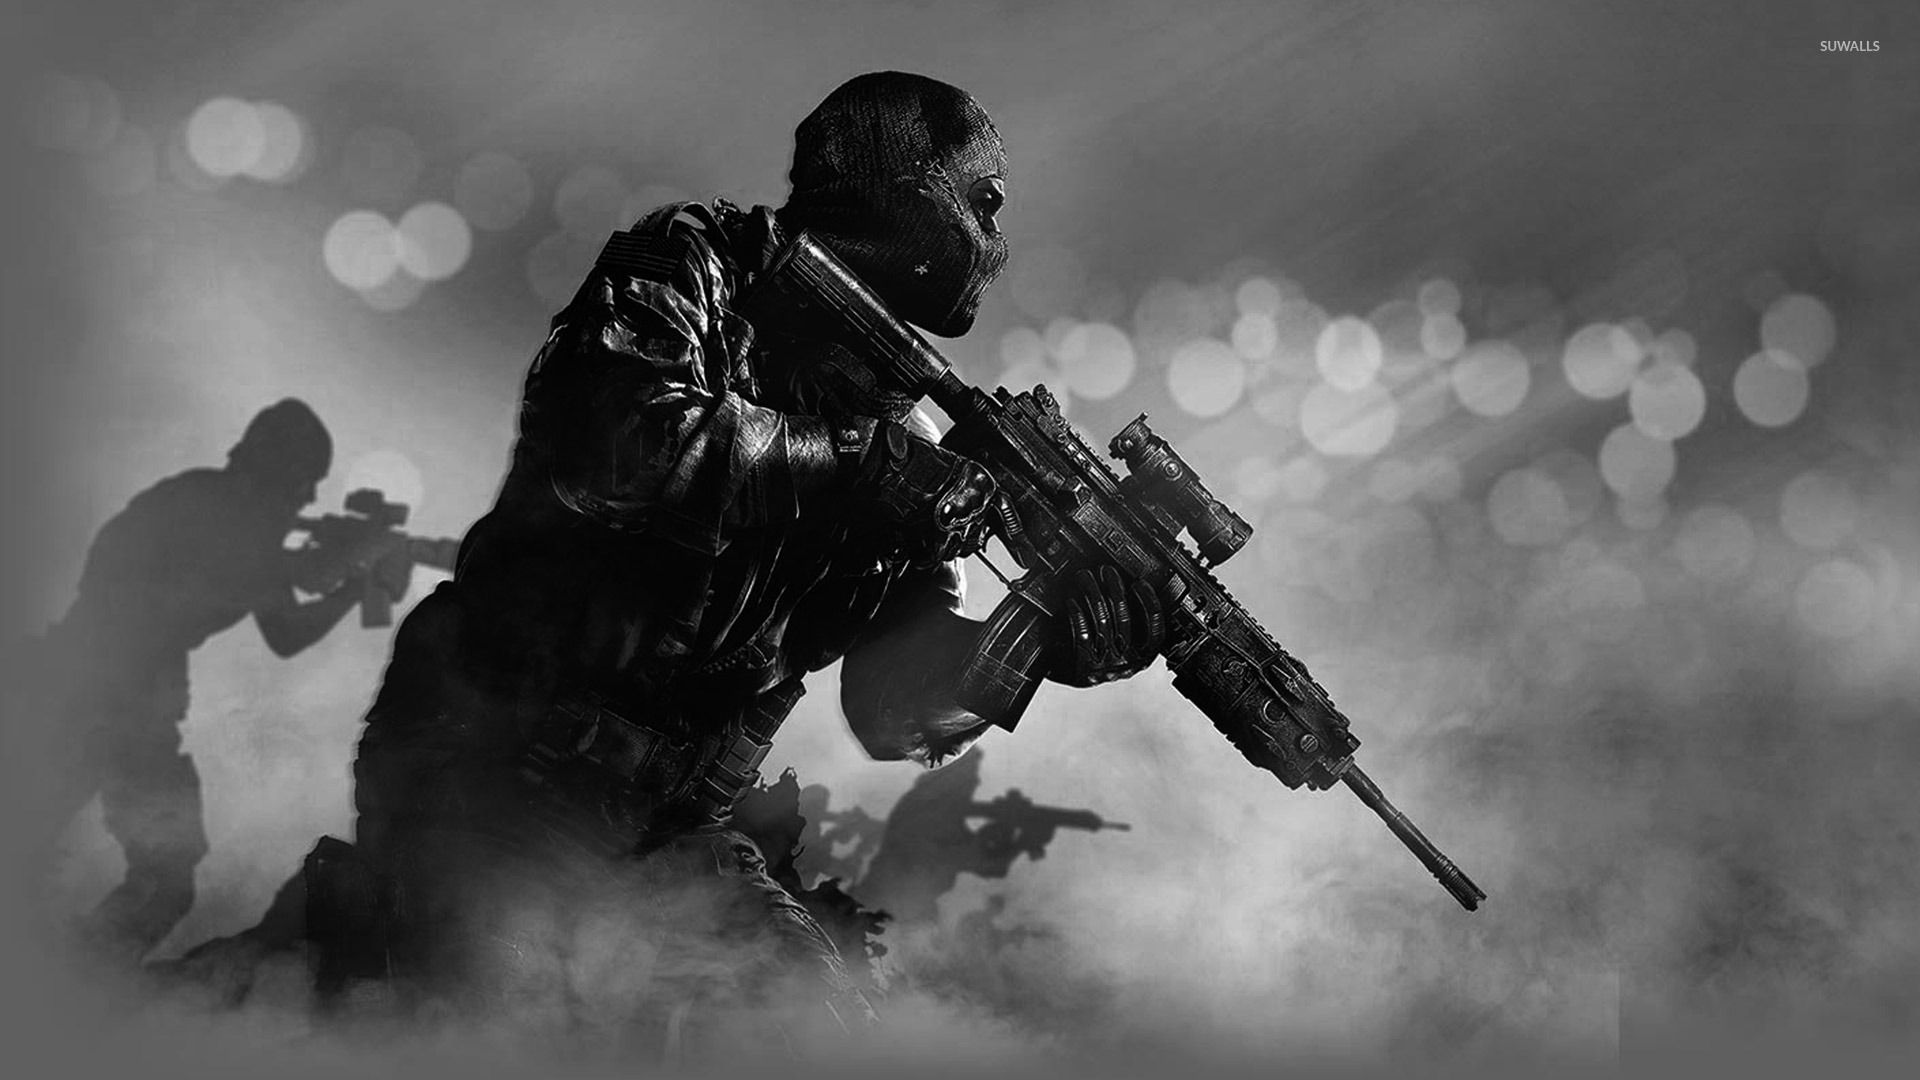 Fondo de pantalla de Call of Duty: Ghosts [19] - Fondos de pantalla de juegos - # 29822